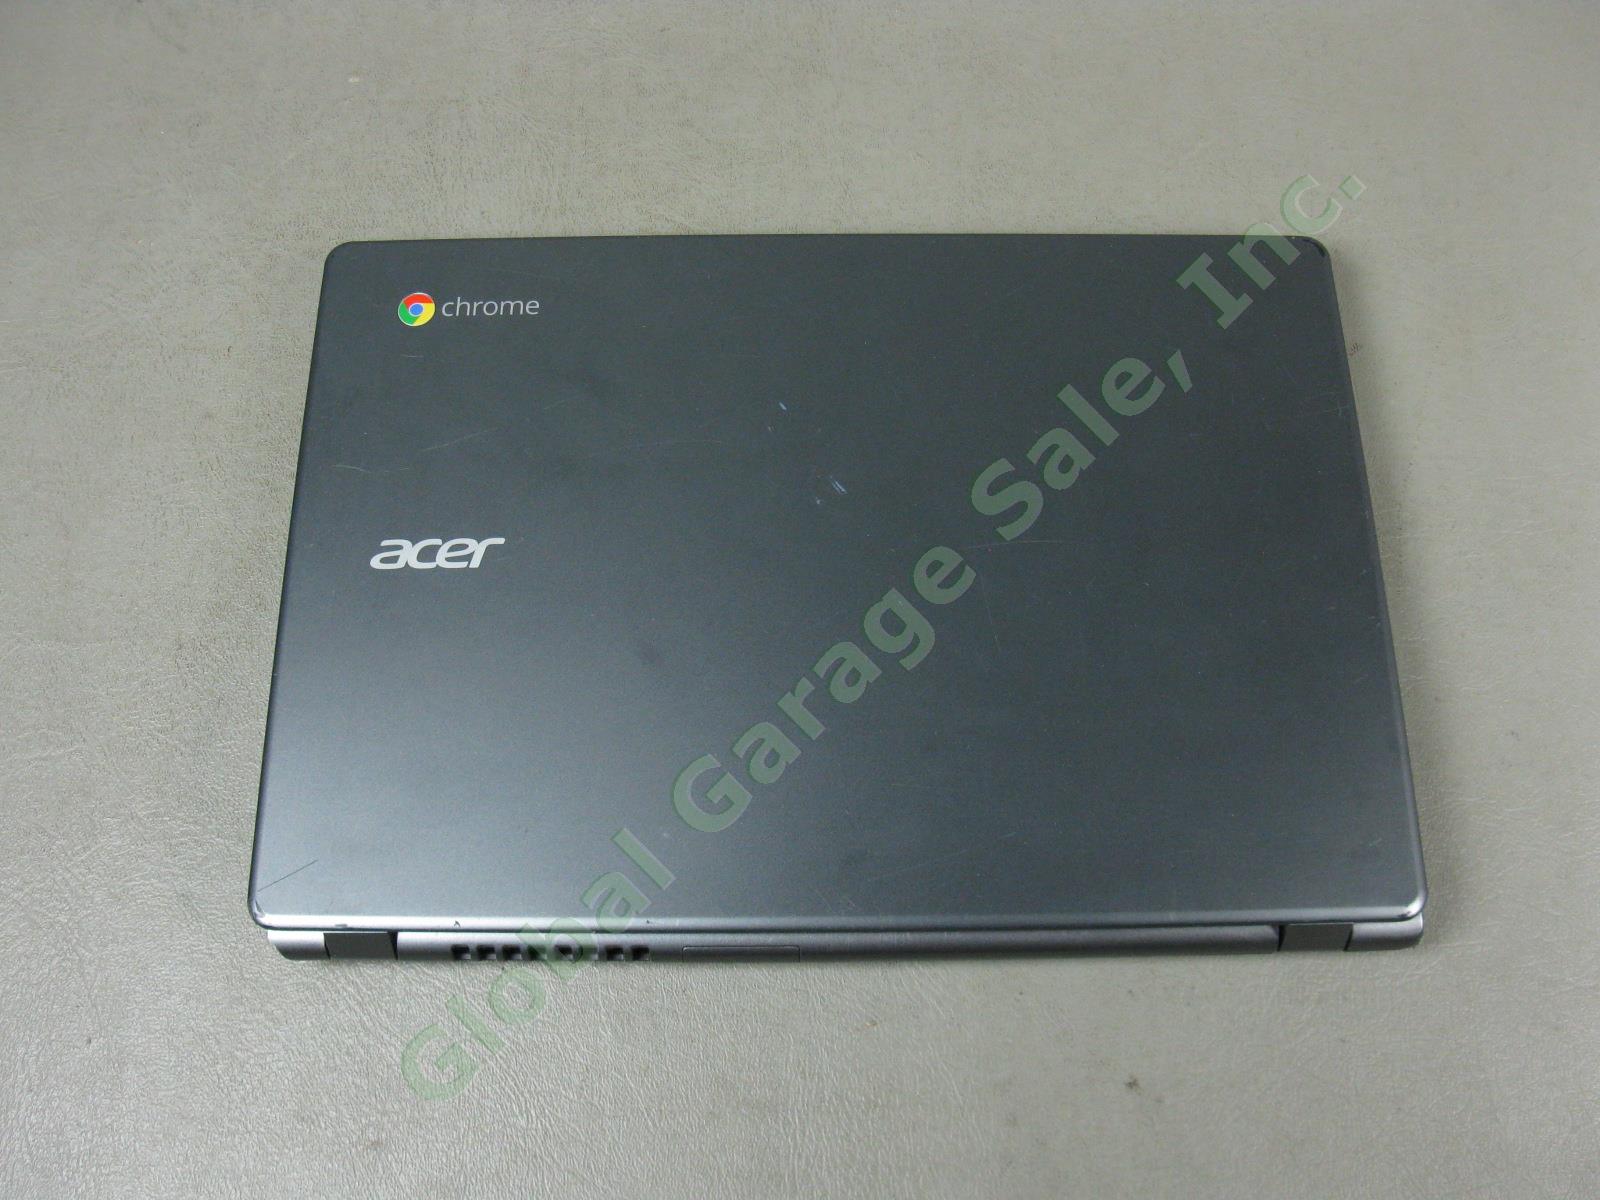 Acer Chromebook Netbook Laptop C720 11.6" 1.4GHz 4GB 16GB See Description NO RES 2